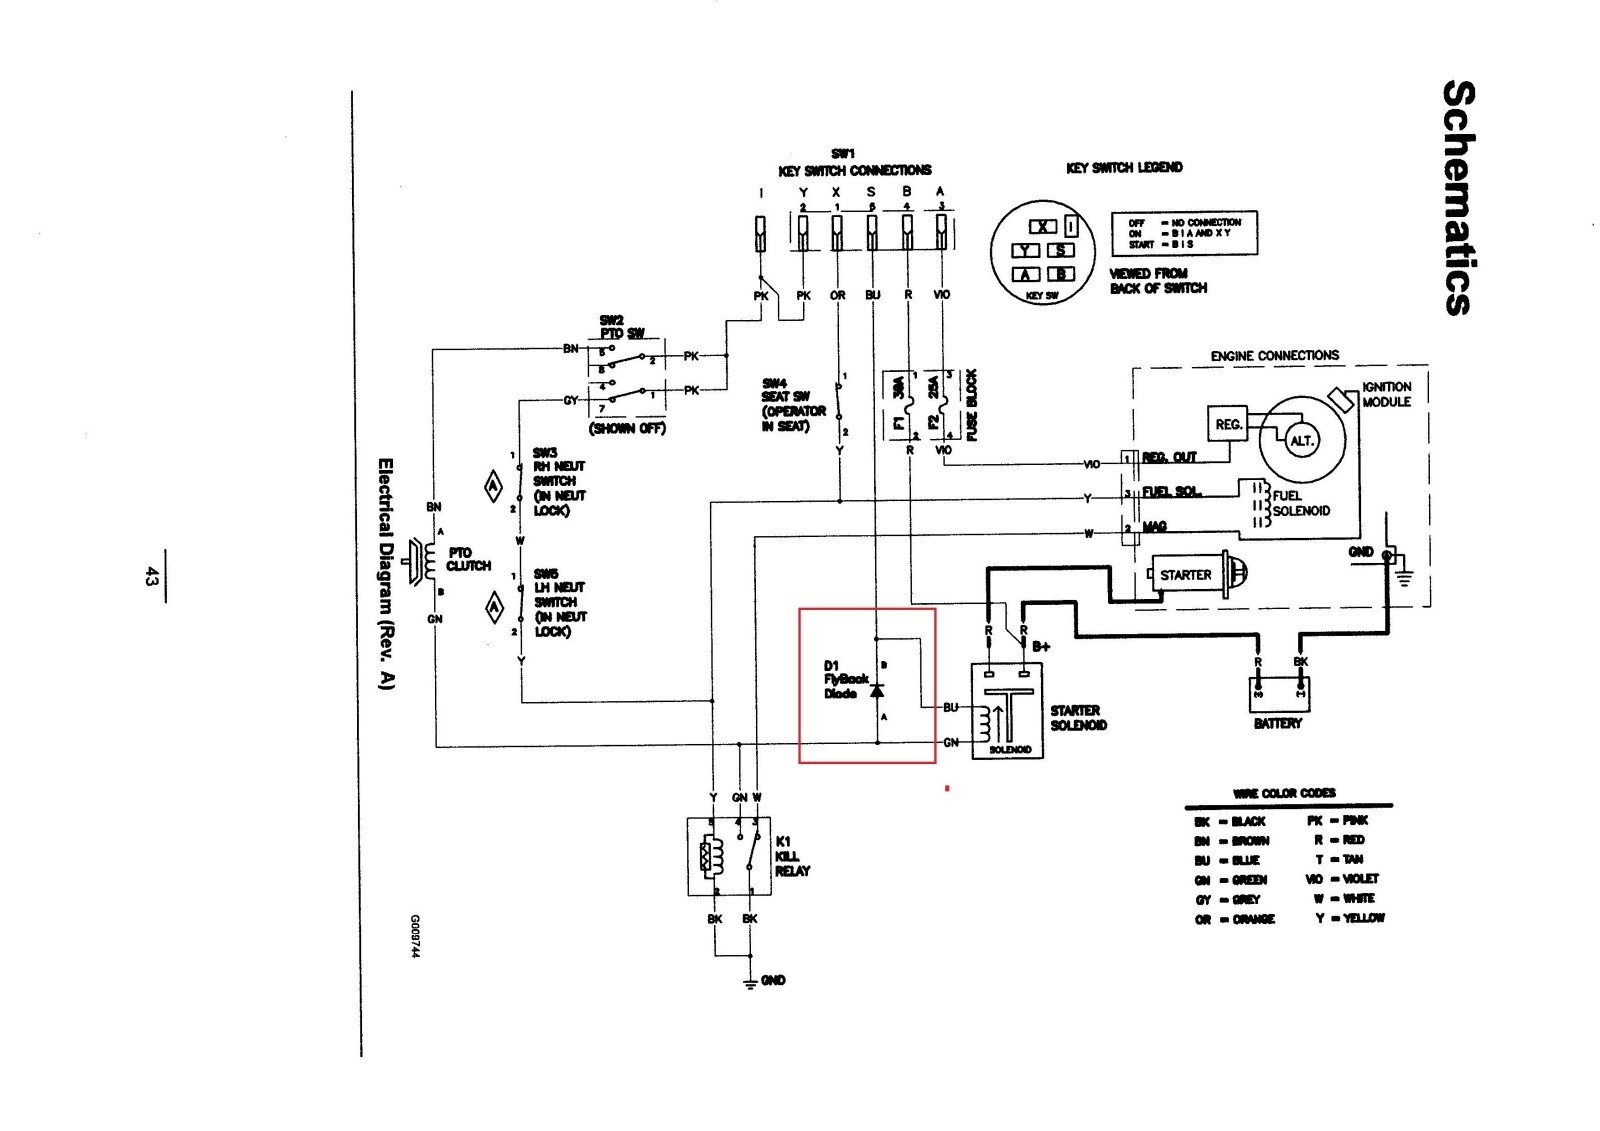 Diagram 7 Pin Connector Wiring Diagram Full Version Hd Quality Wiring Diagram Classdiagramexamples Veneziaartmagazine It